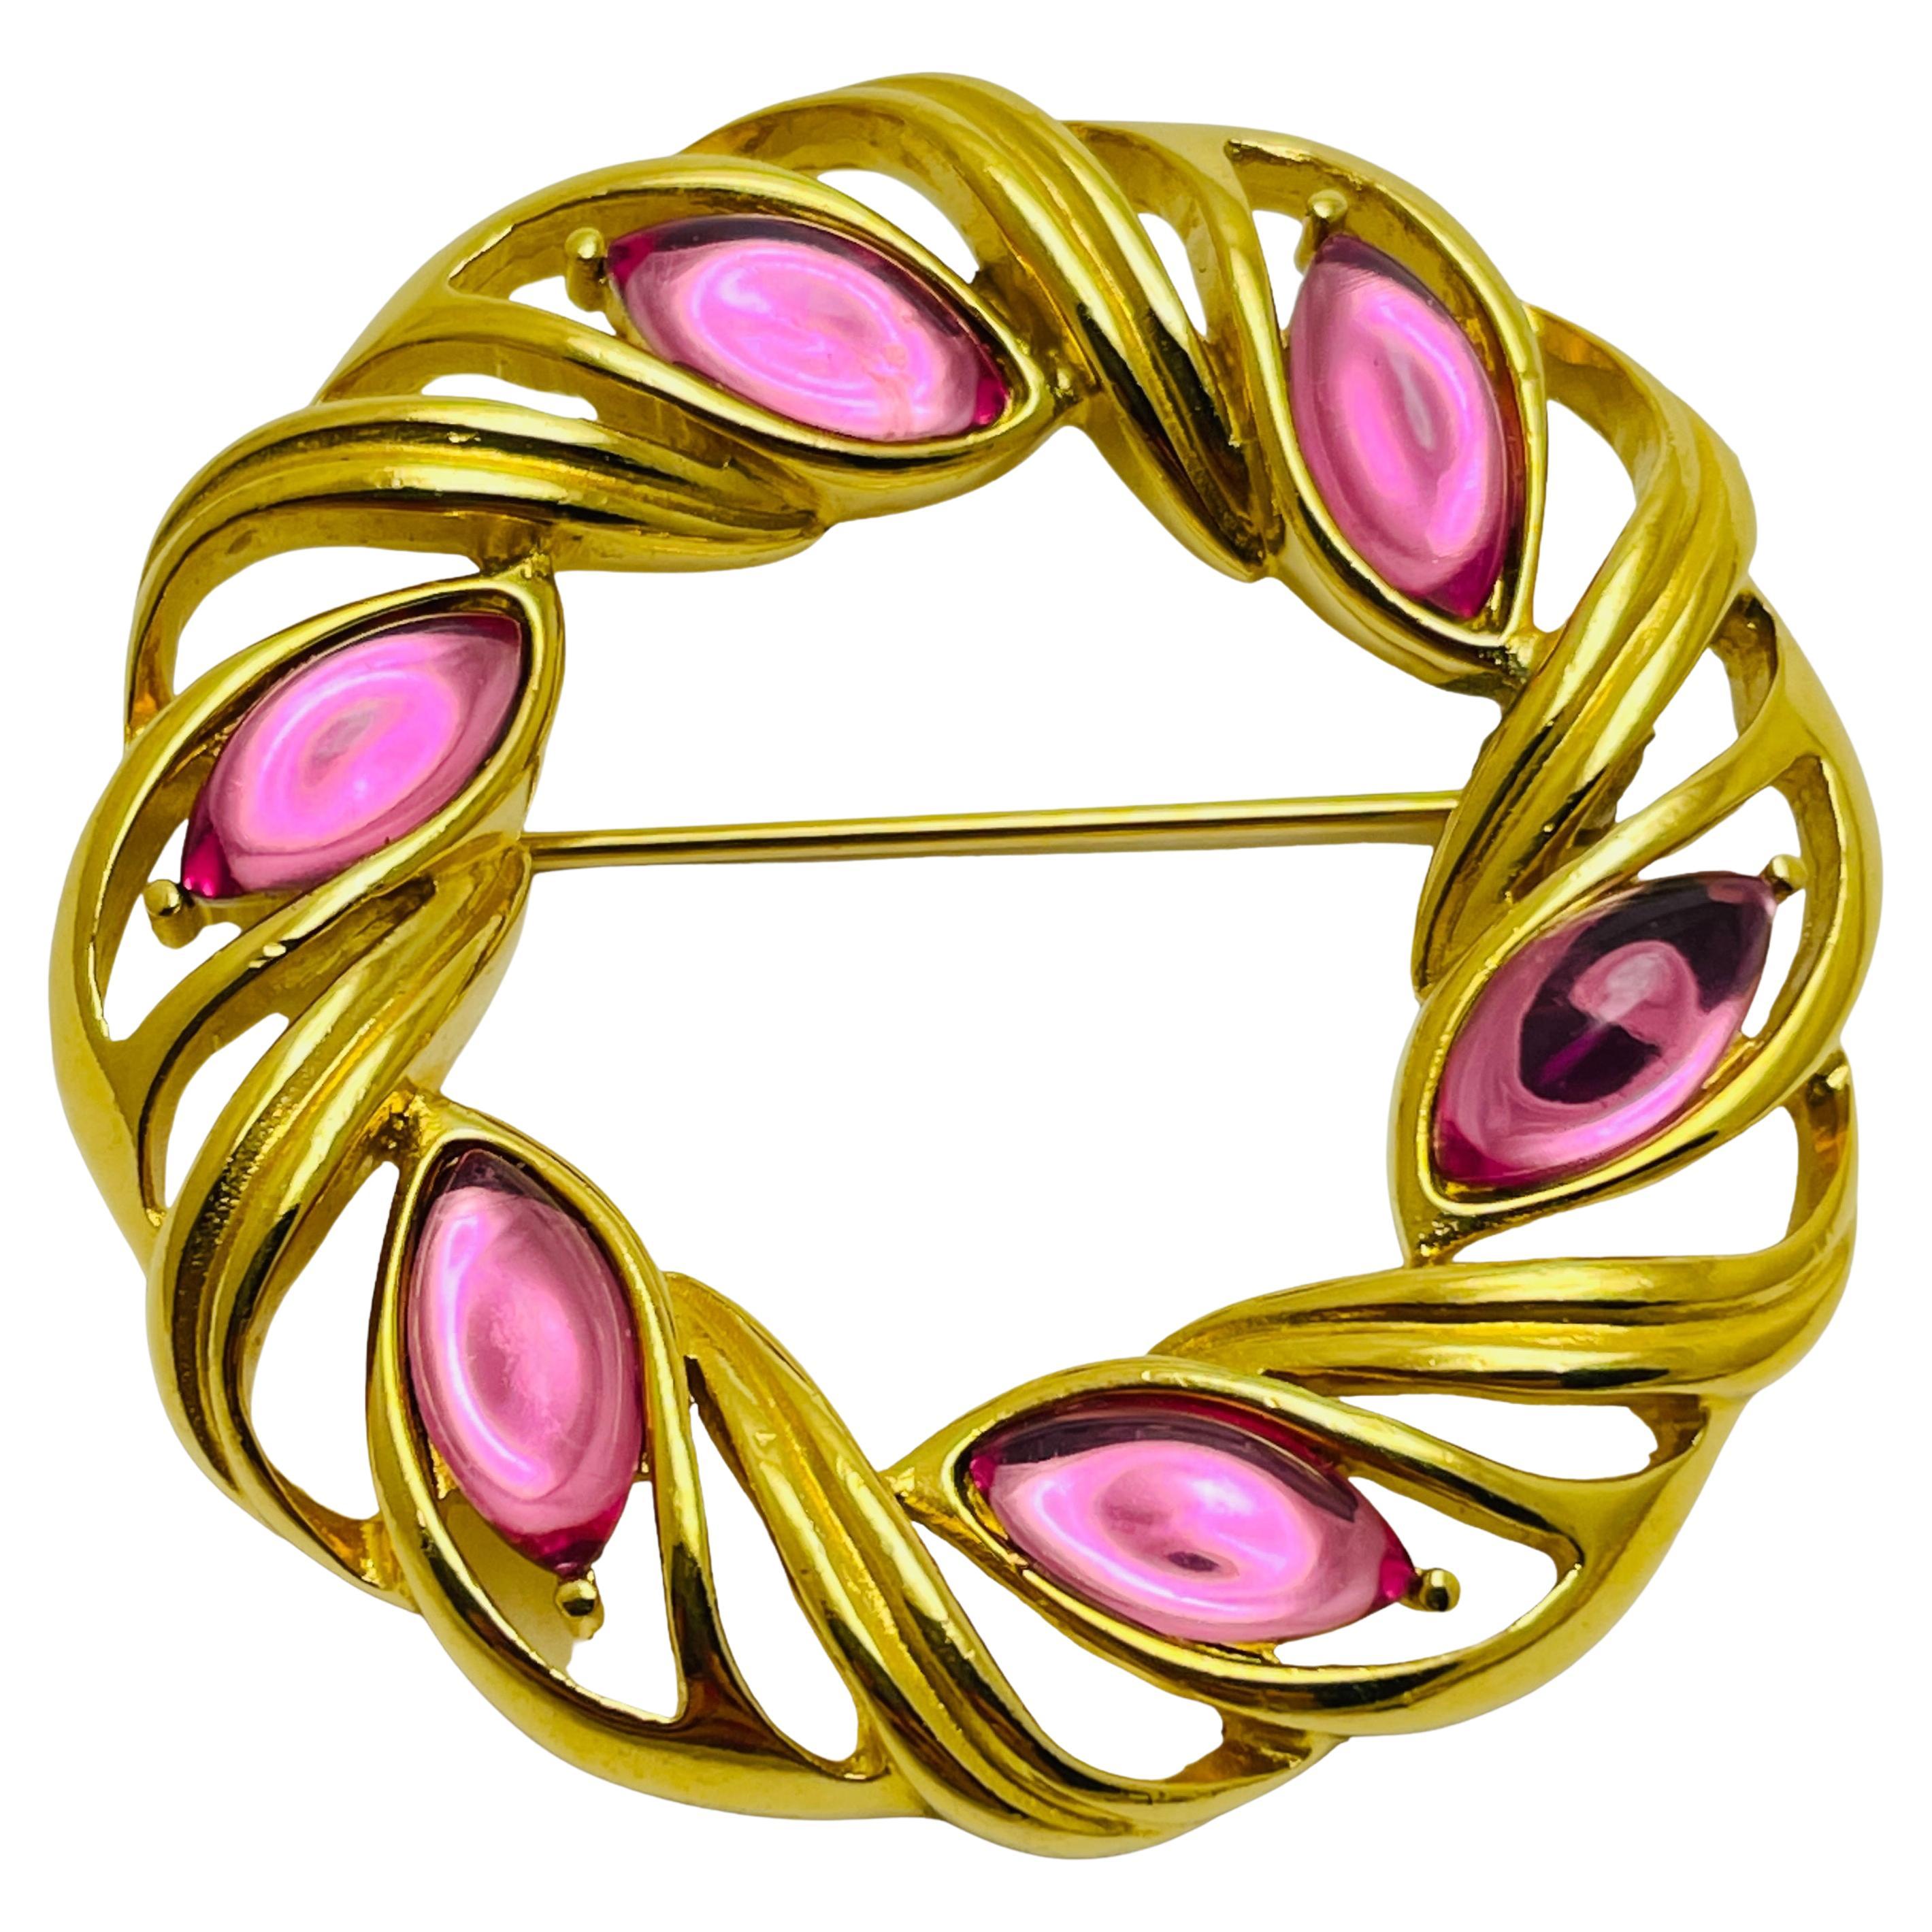 TRIFARI vintage gold pink glass jelly belly designer brooch For Sale